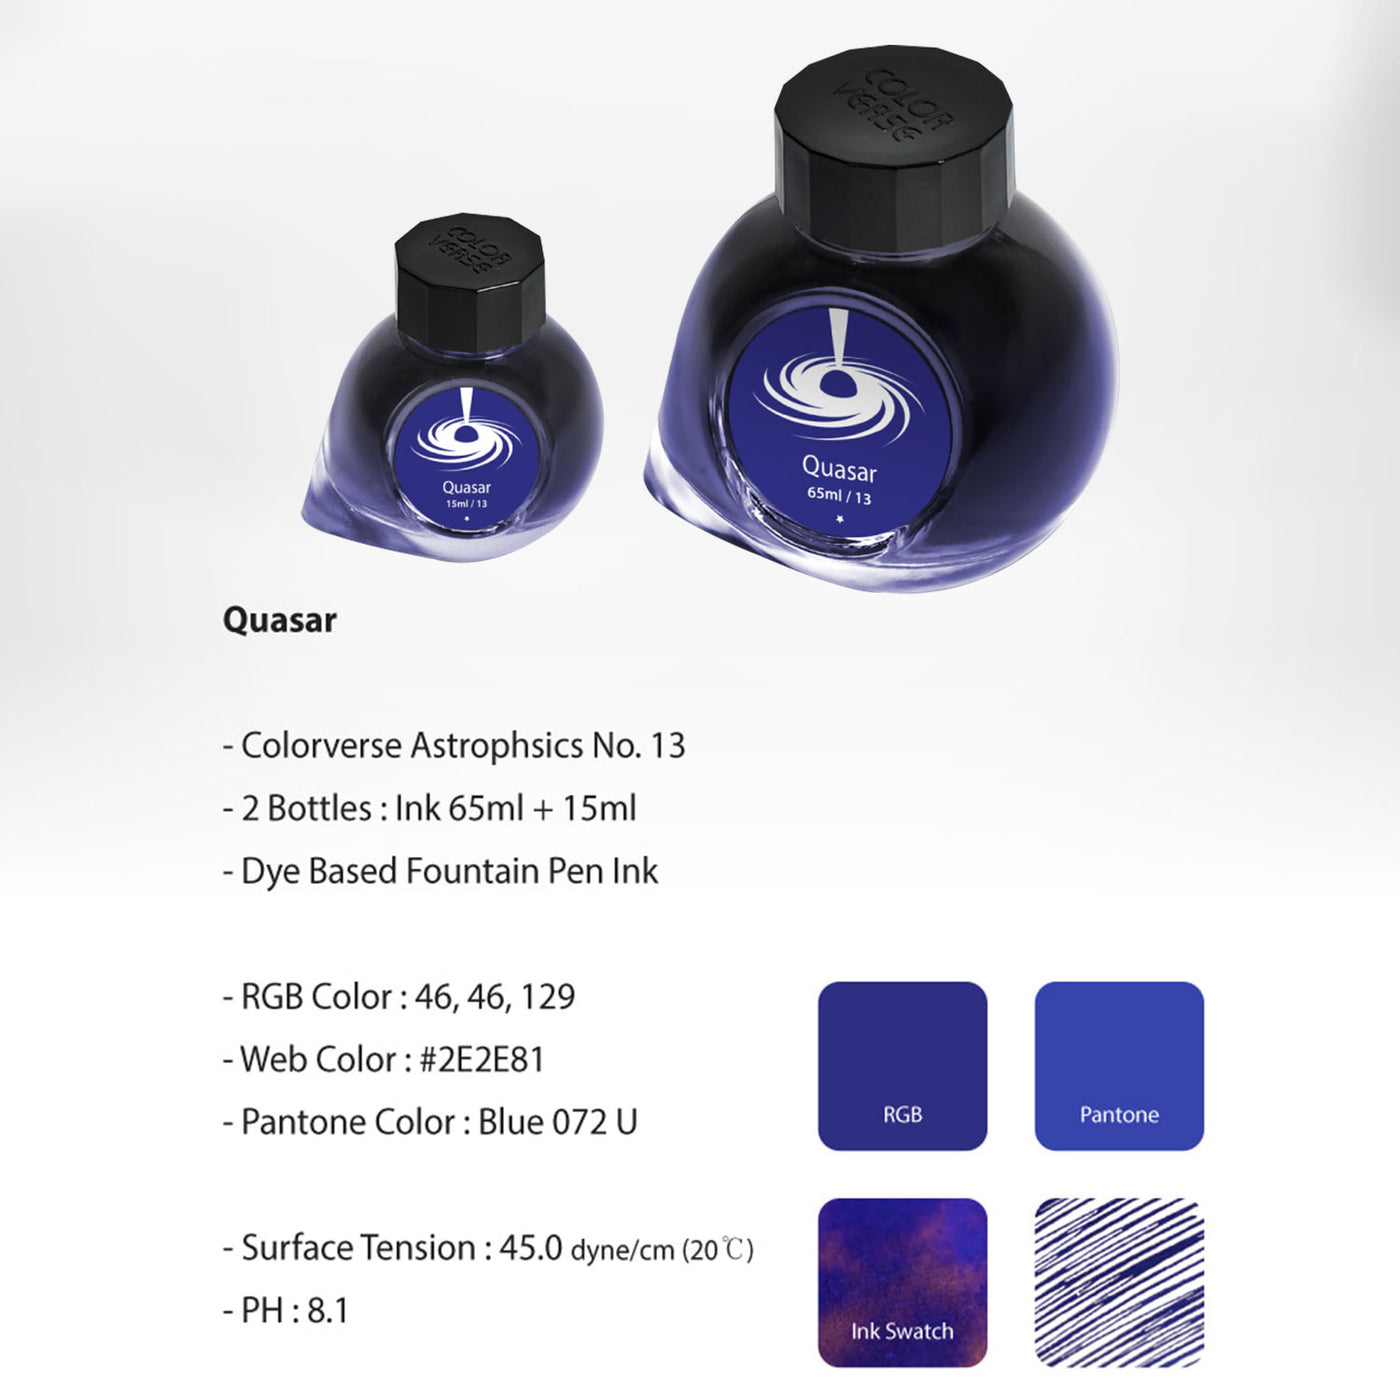 Colorverse Astrophysics Quasar Ink Bottle Dark Blue - 65ml + 15ml 2